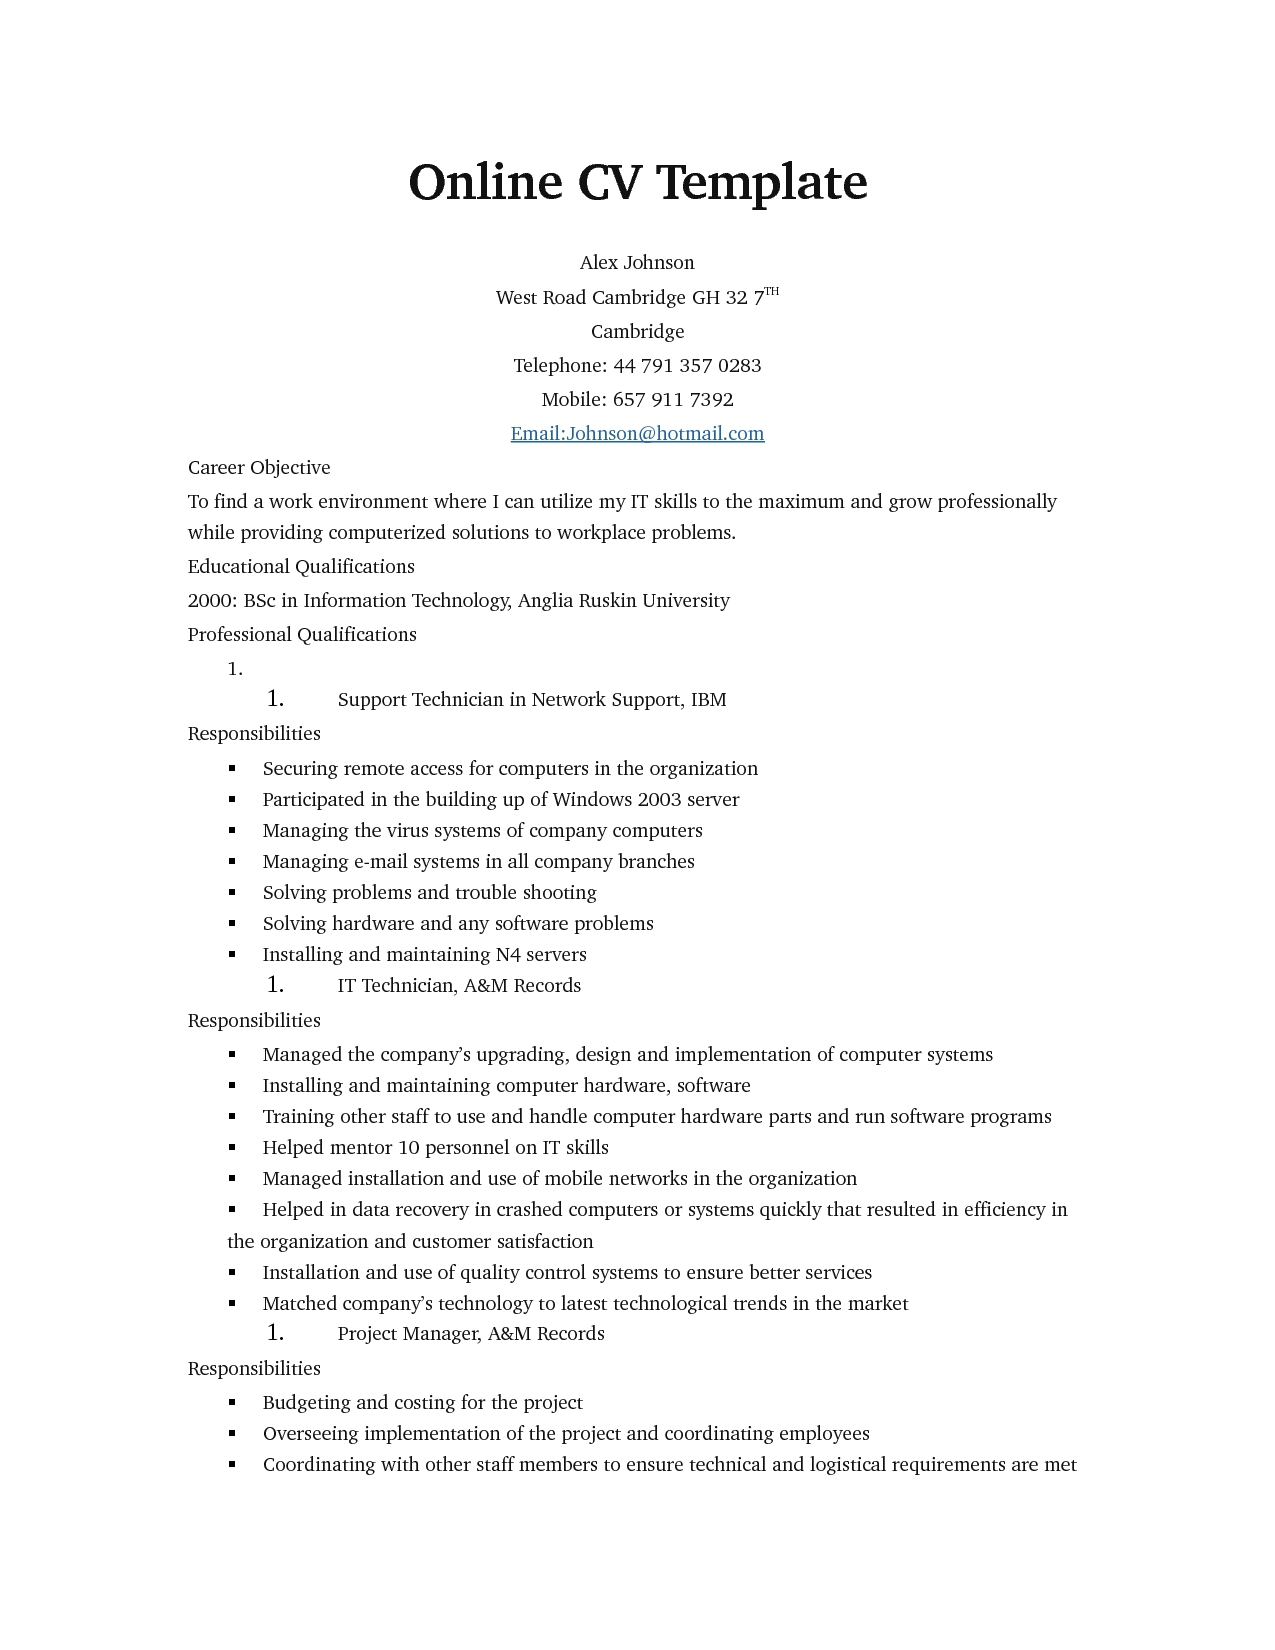 Resume Format Online 